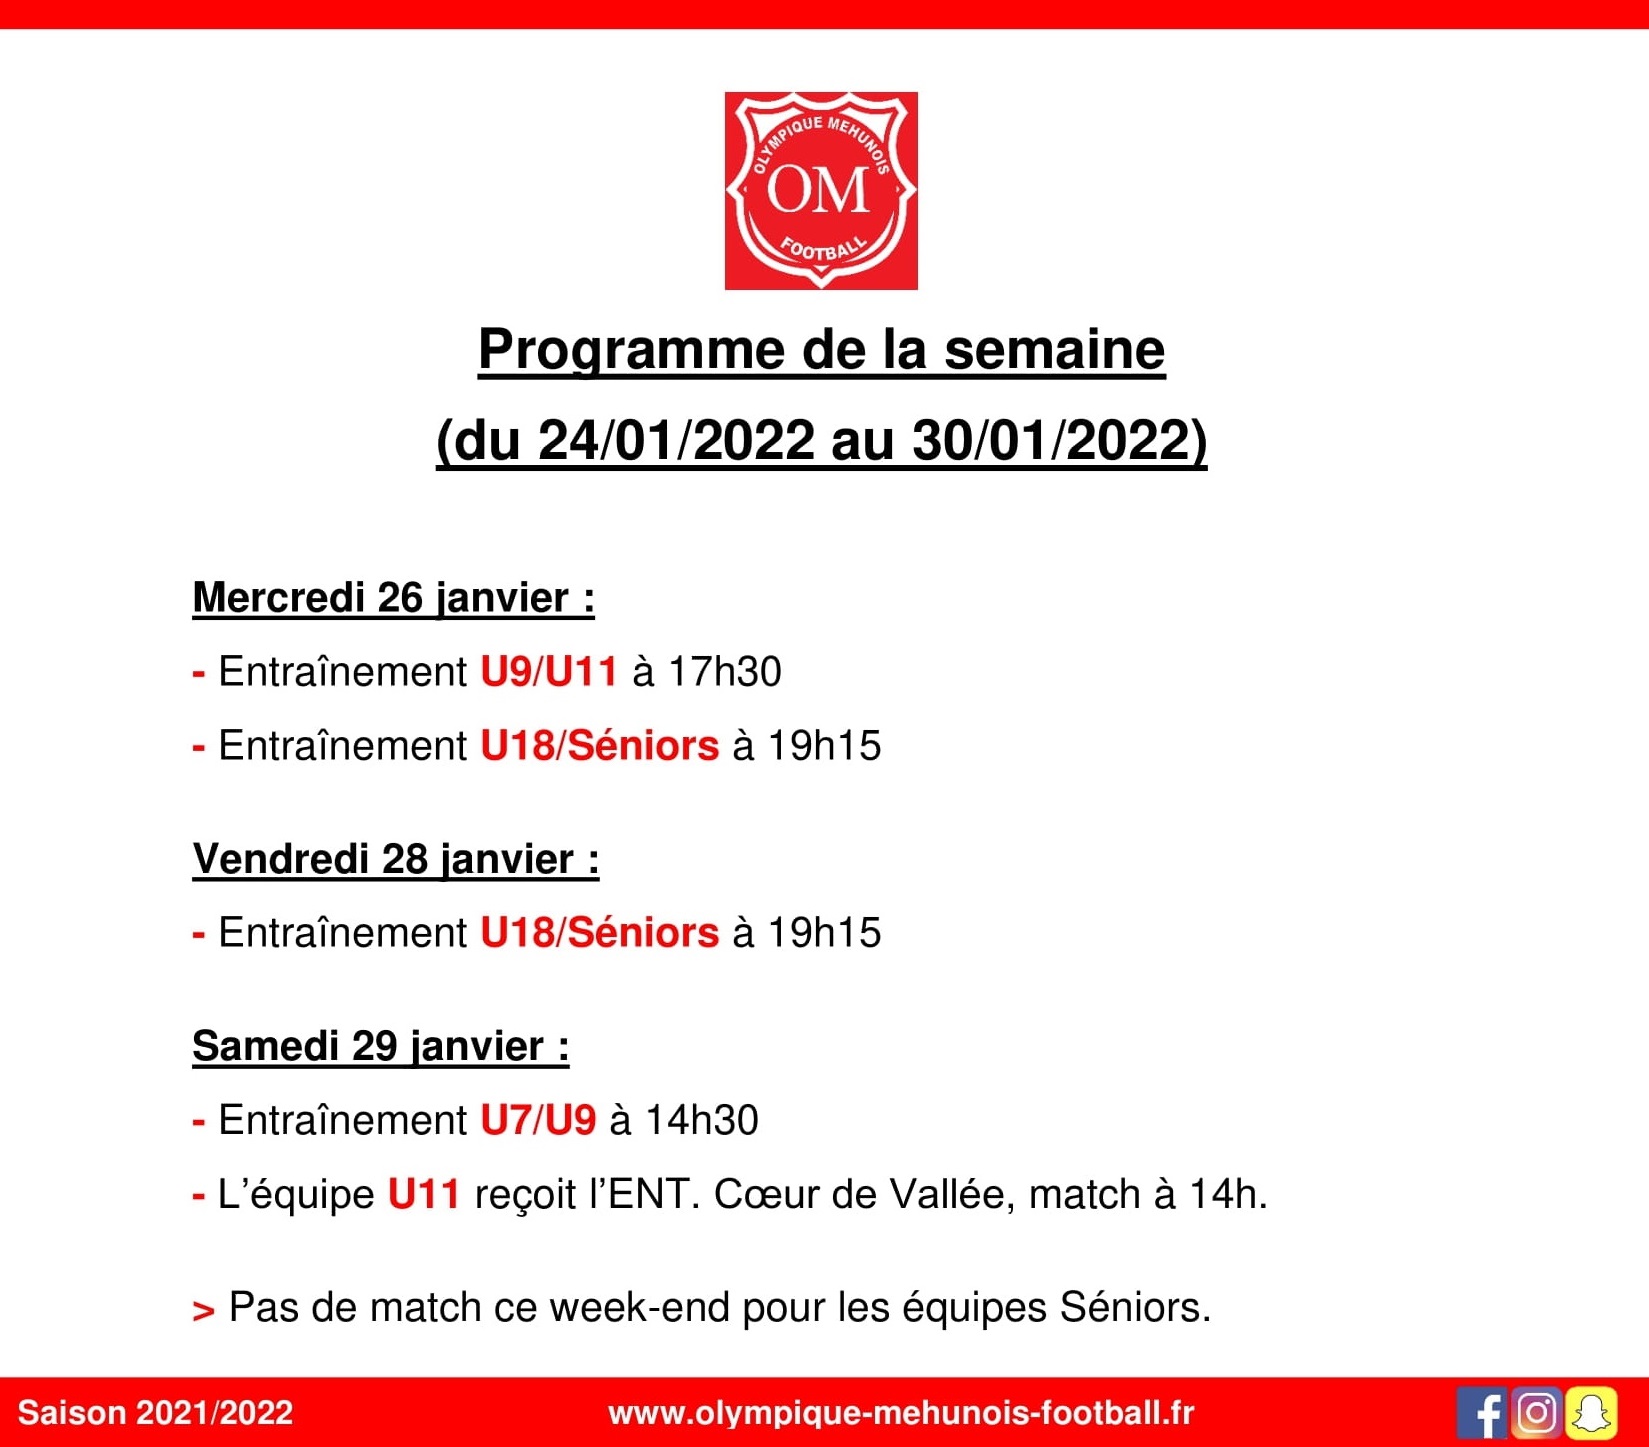 Programme_de_la_semaine_24-01-2022_30-01-2022-1.jpg